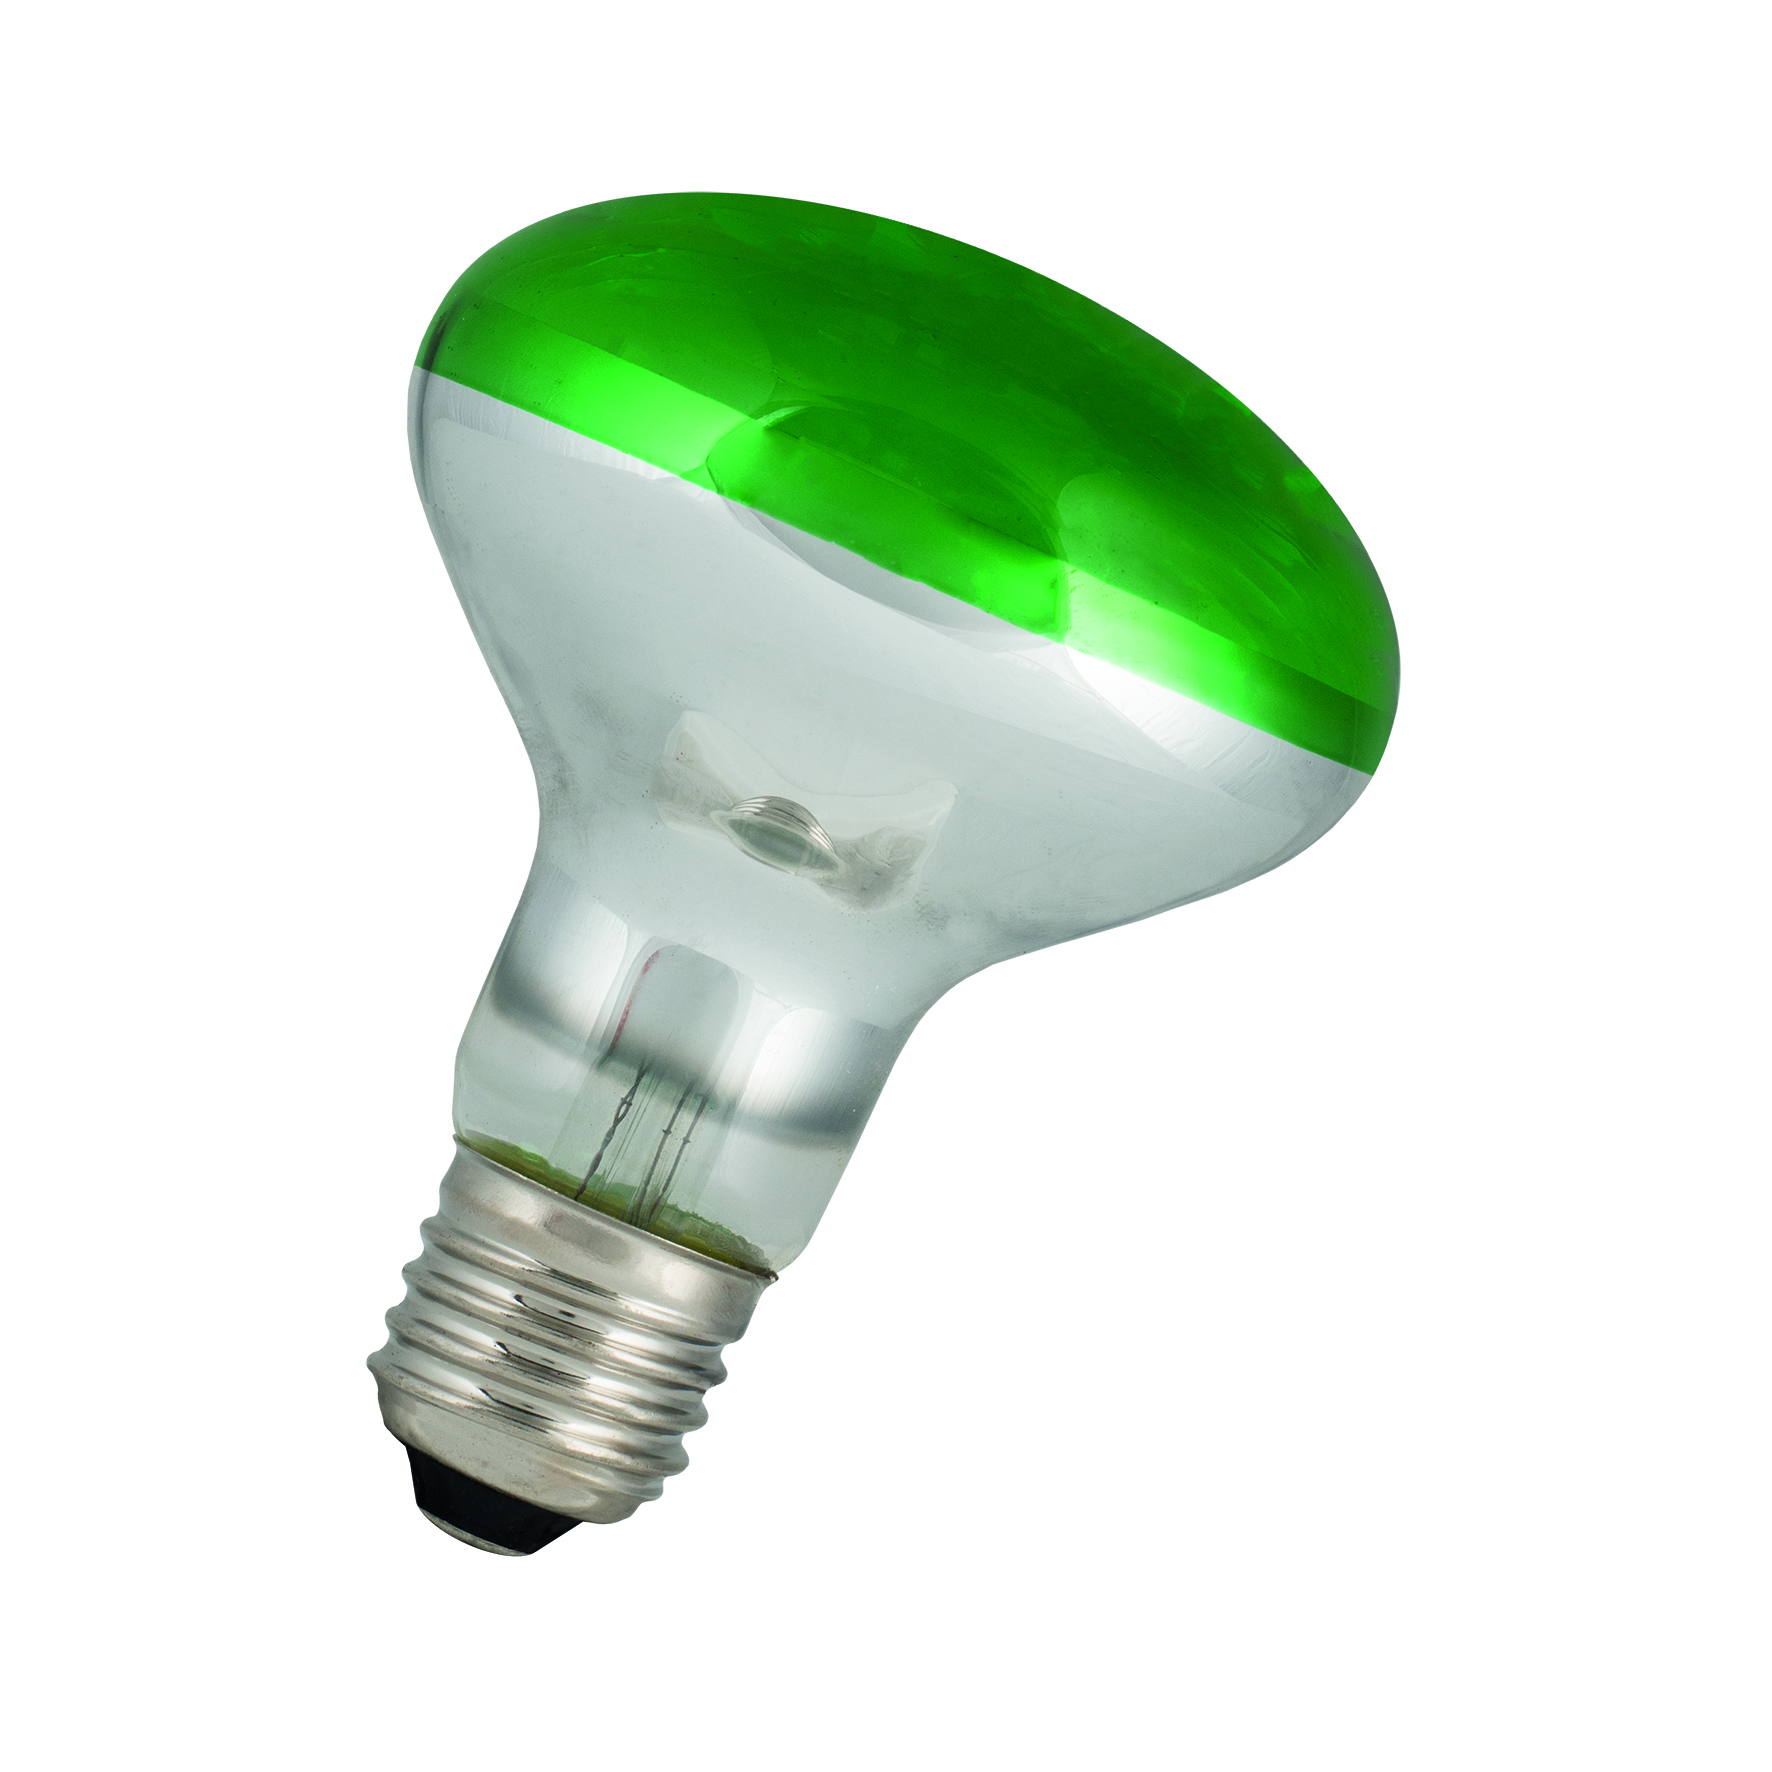 LED Filament R80 E27 240V 4W Green